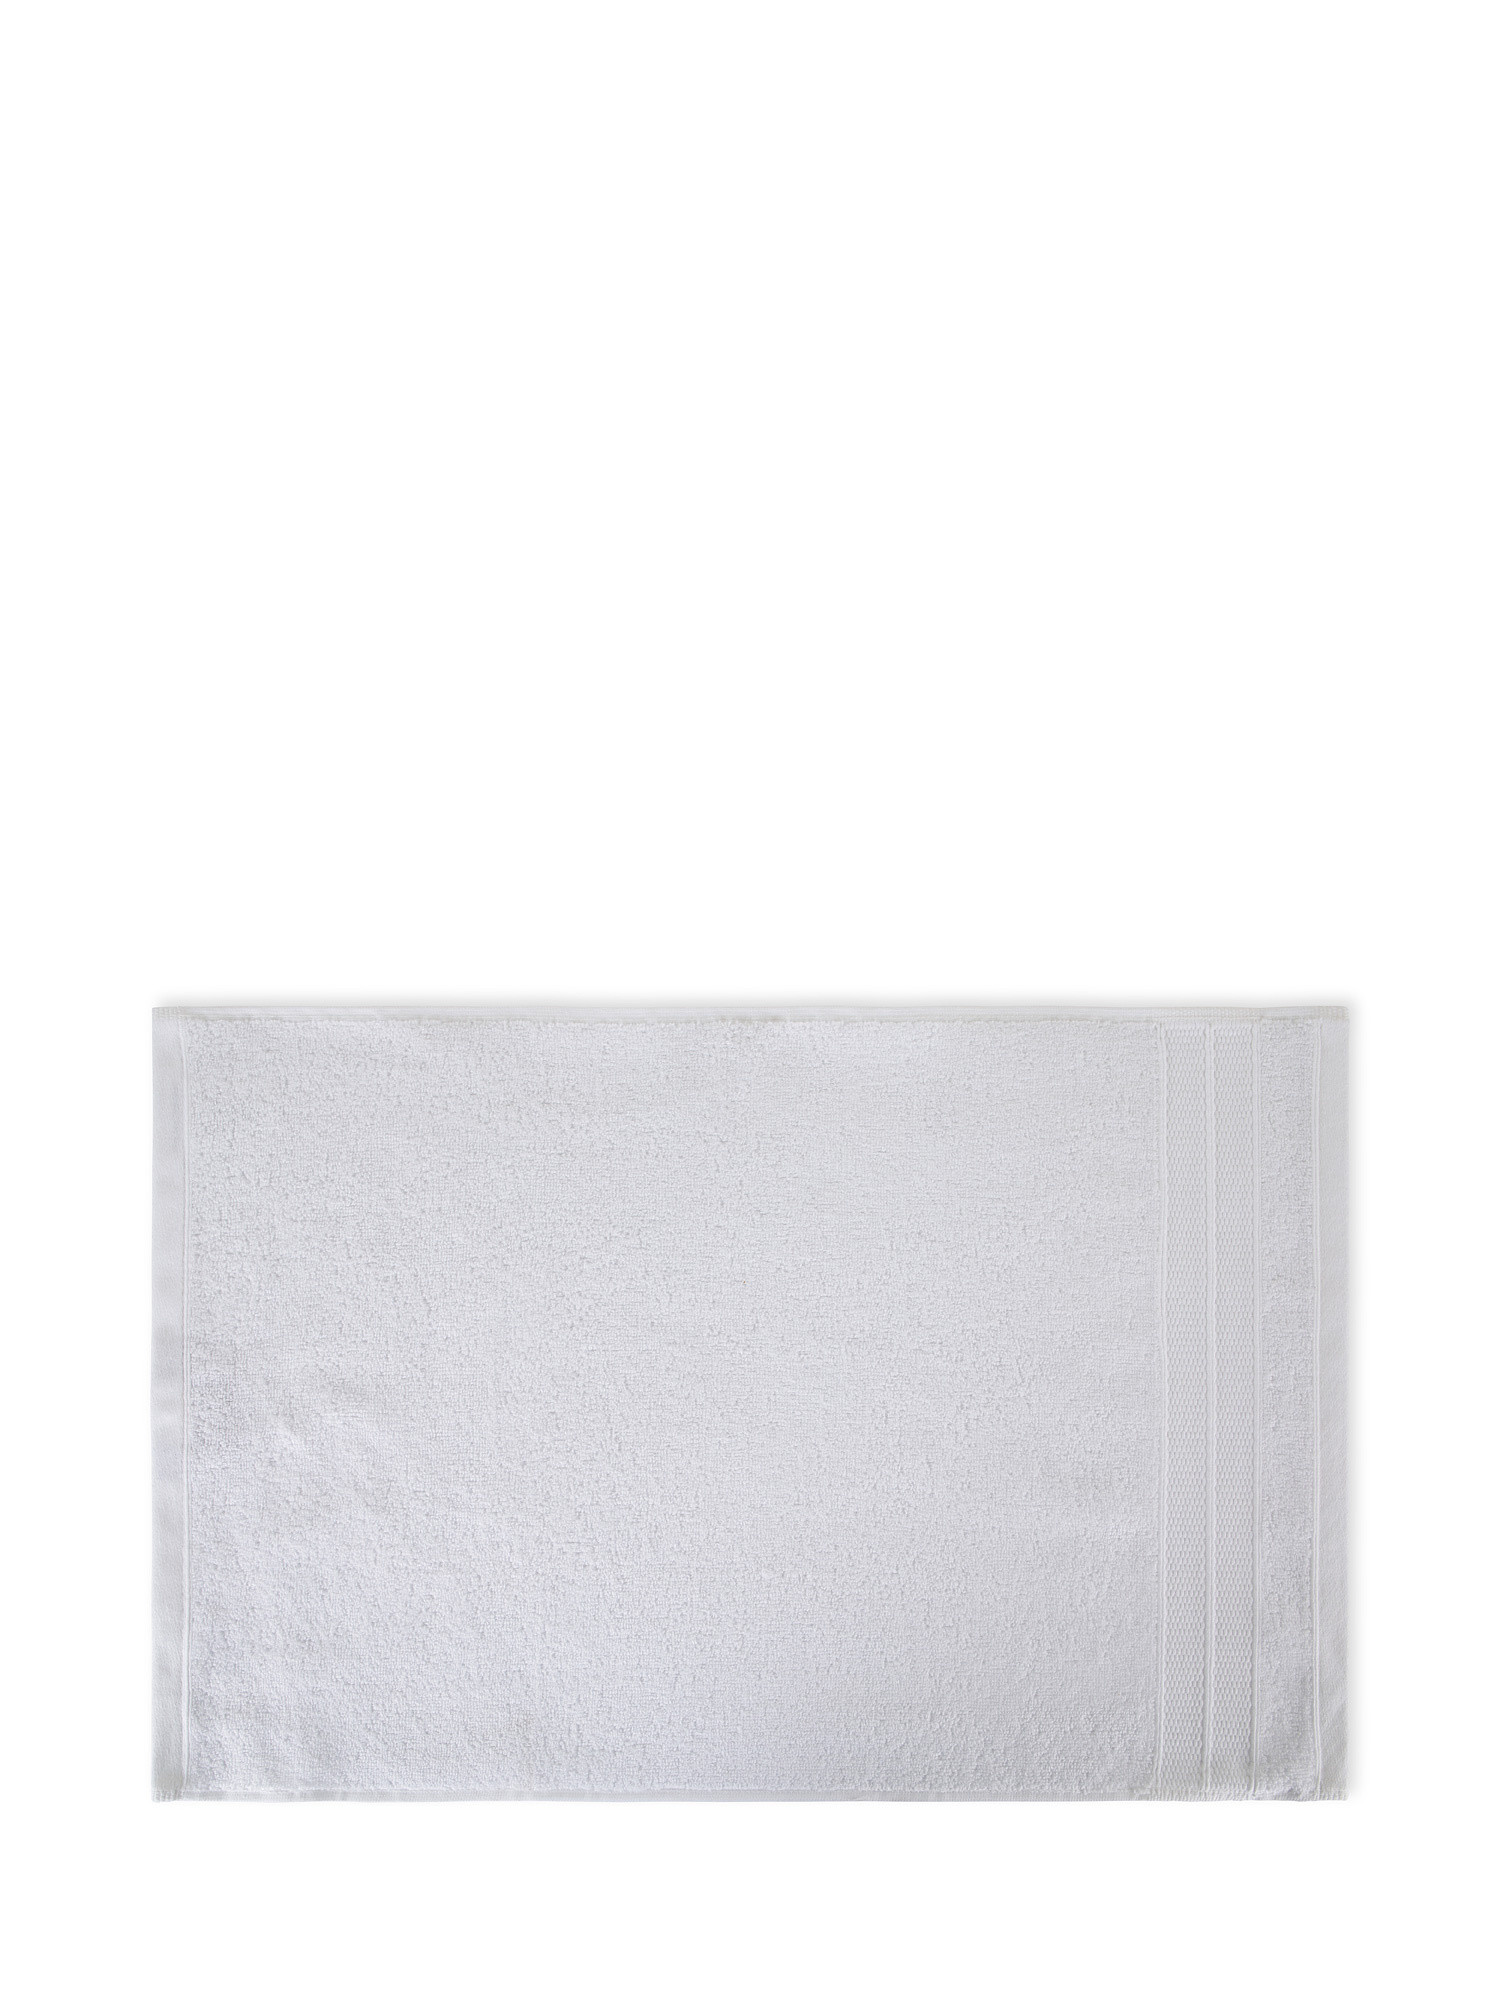 Asciugamano spugna di cotone tinta unita, Bianco, large image number 1